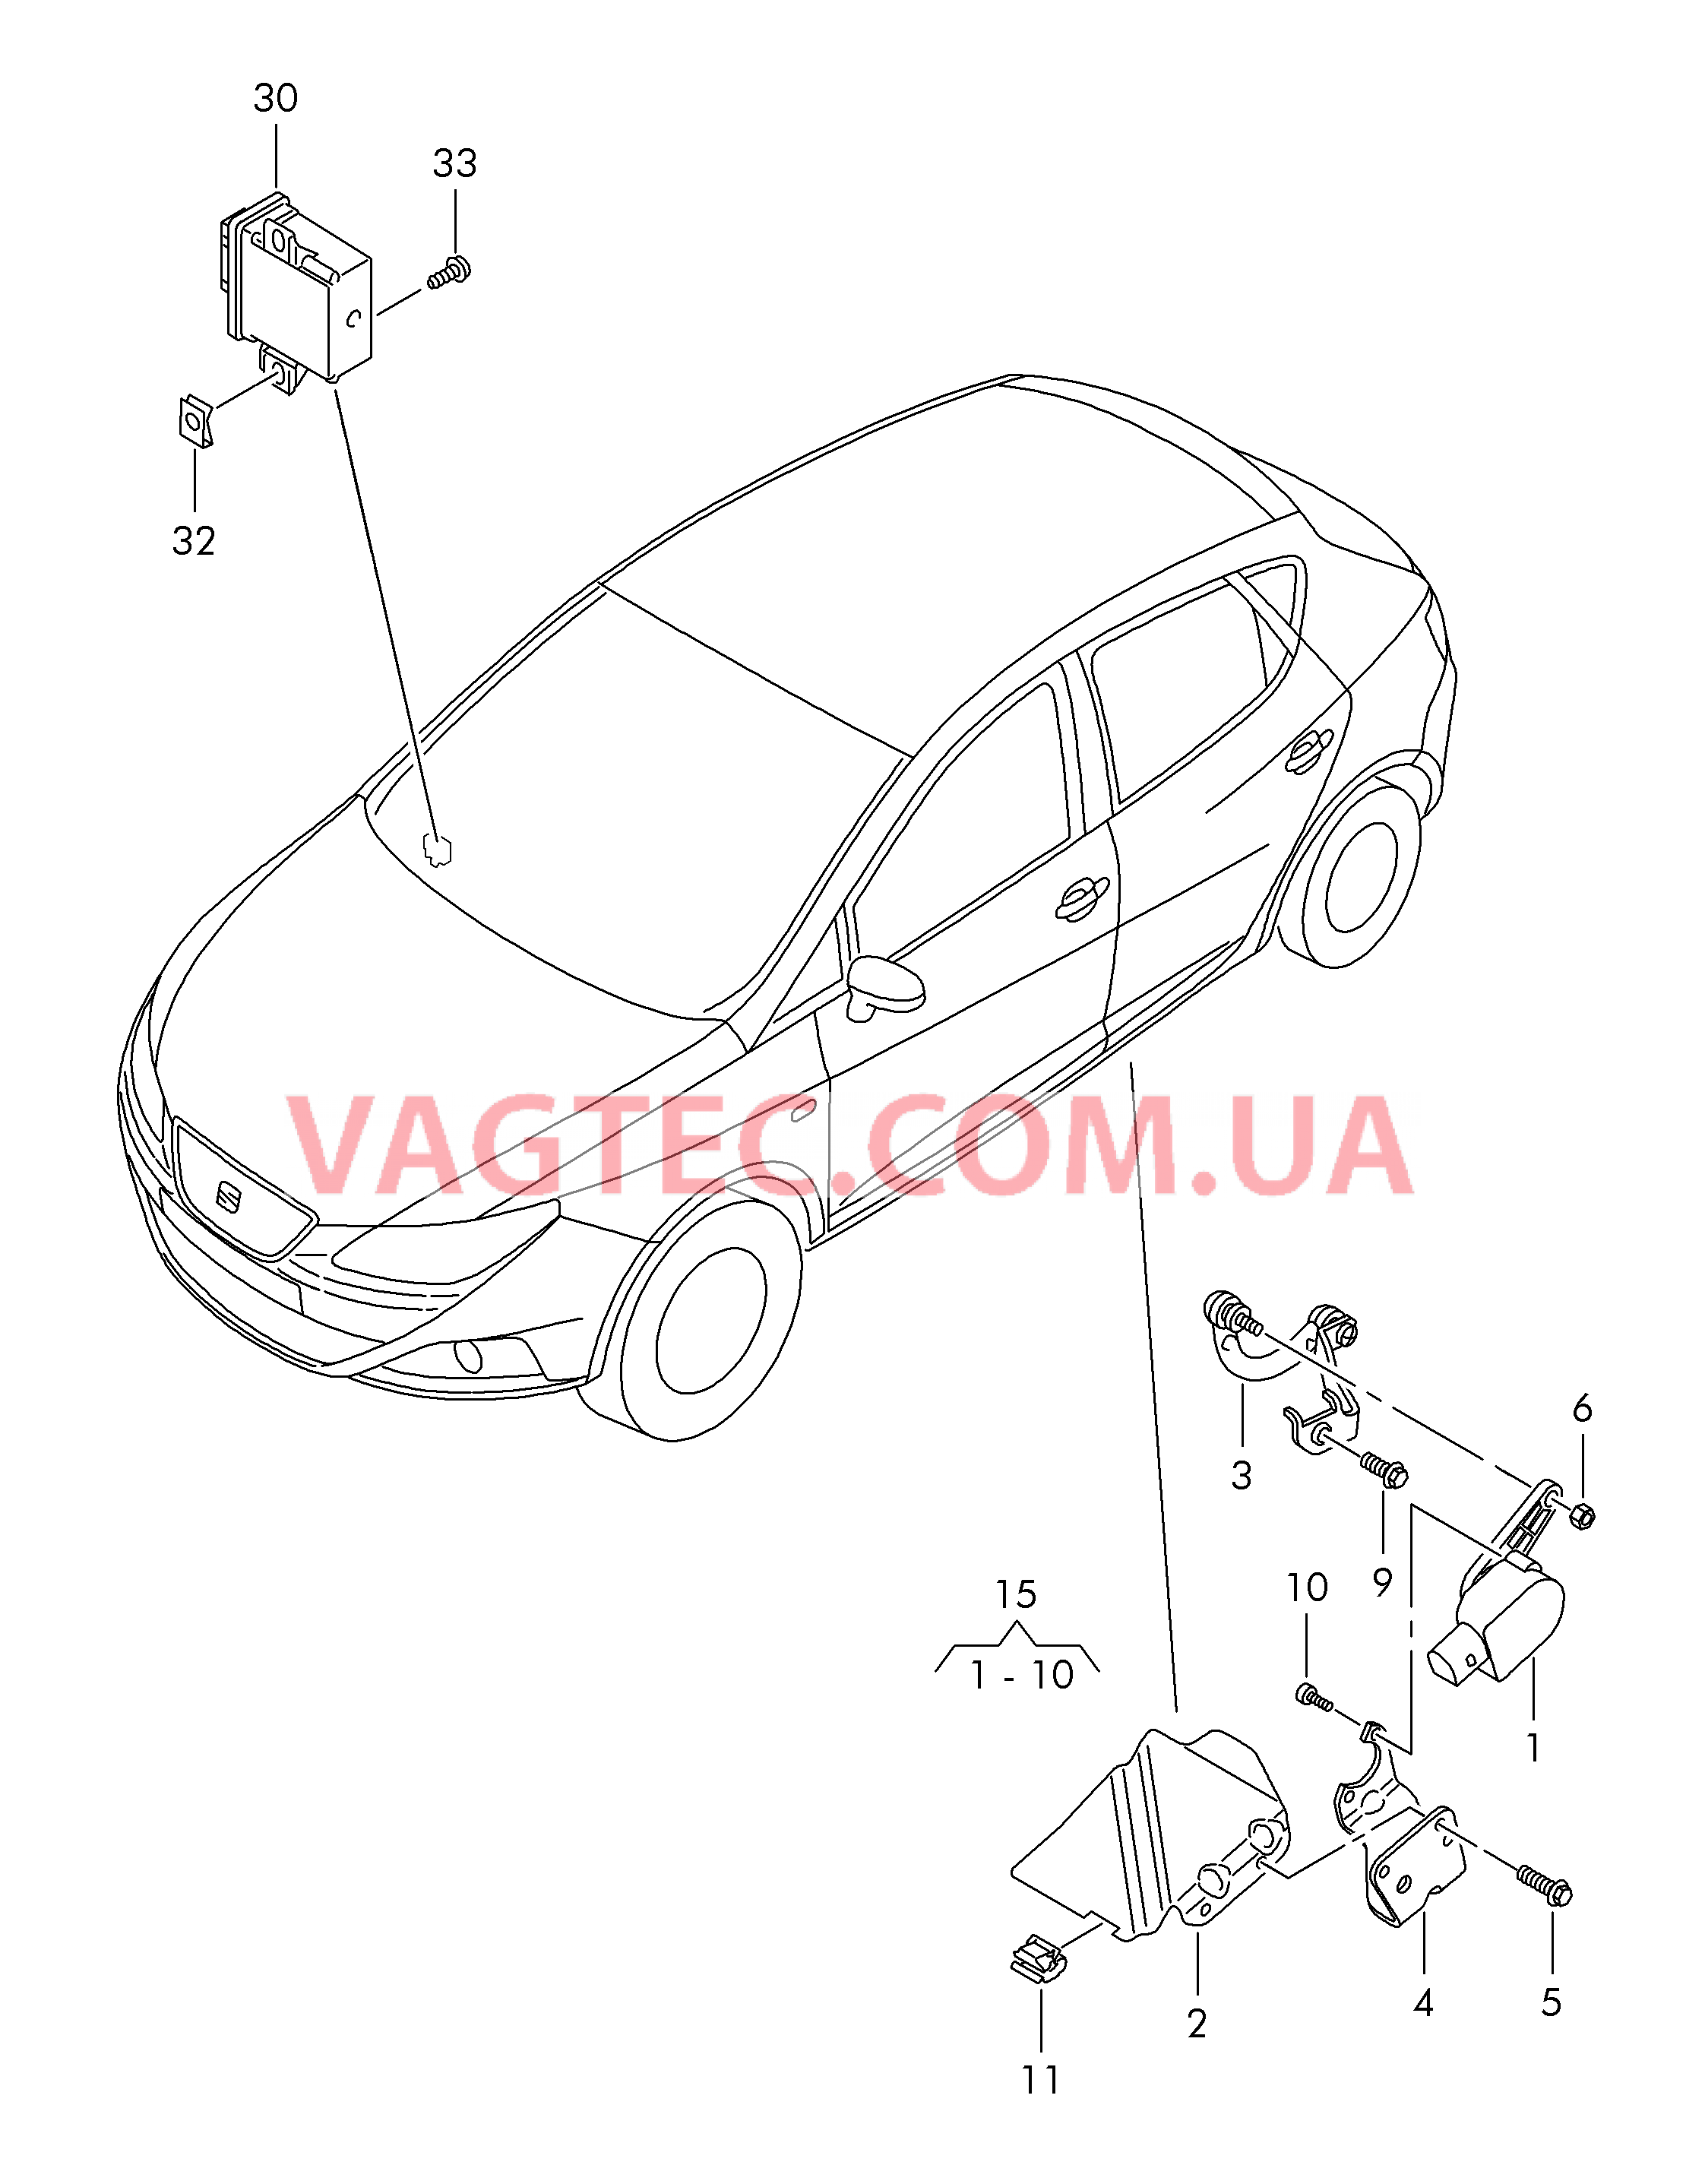 Датчик корректора фар  БУ автоматического корректора фар  для SEAT Ibiza 2010-1